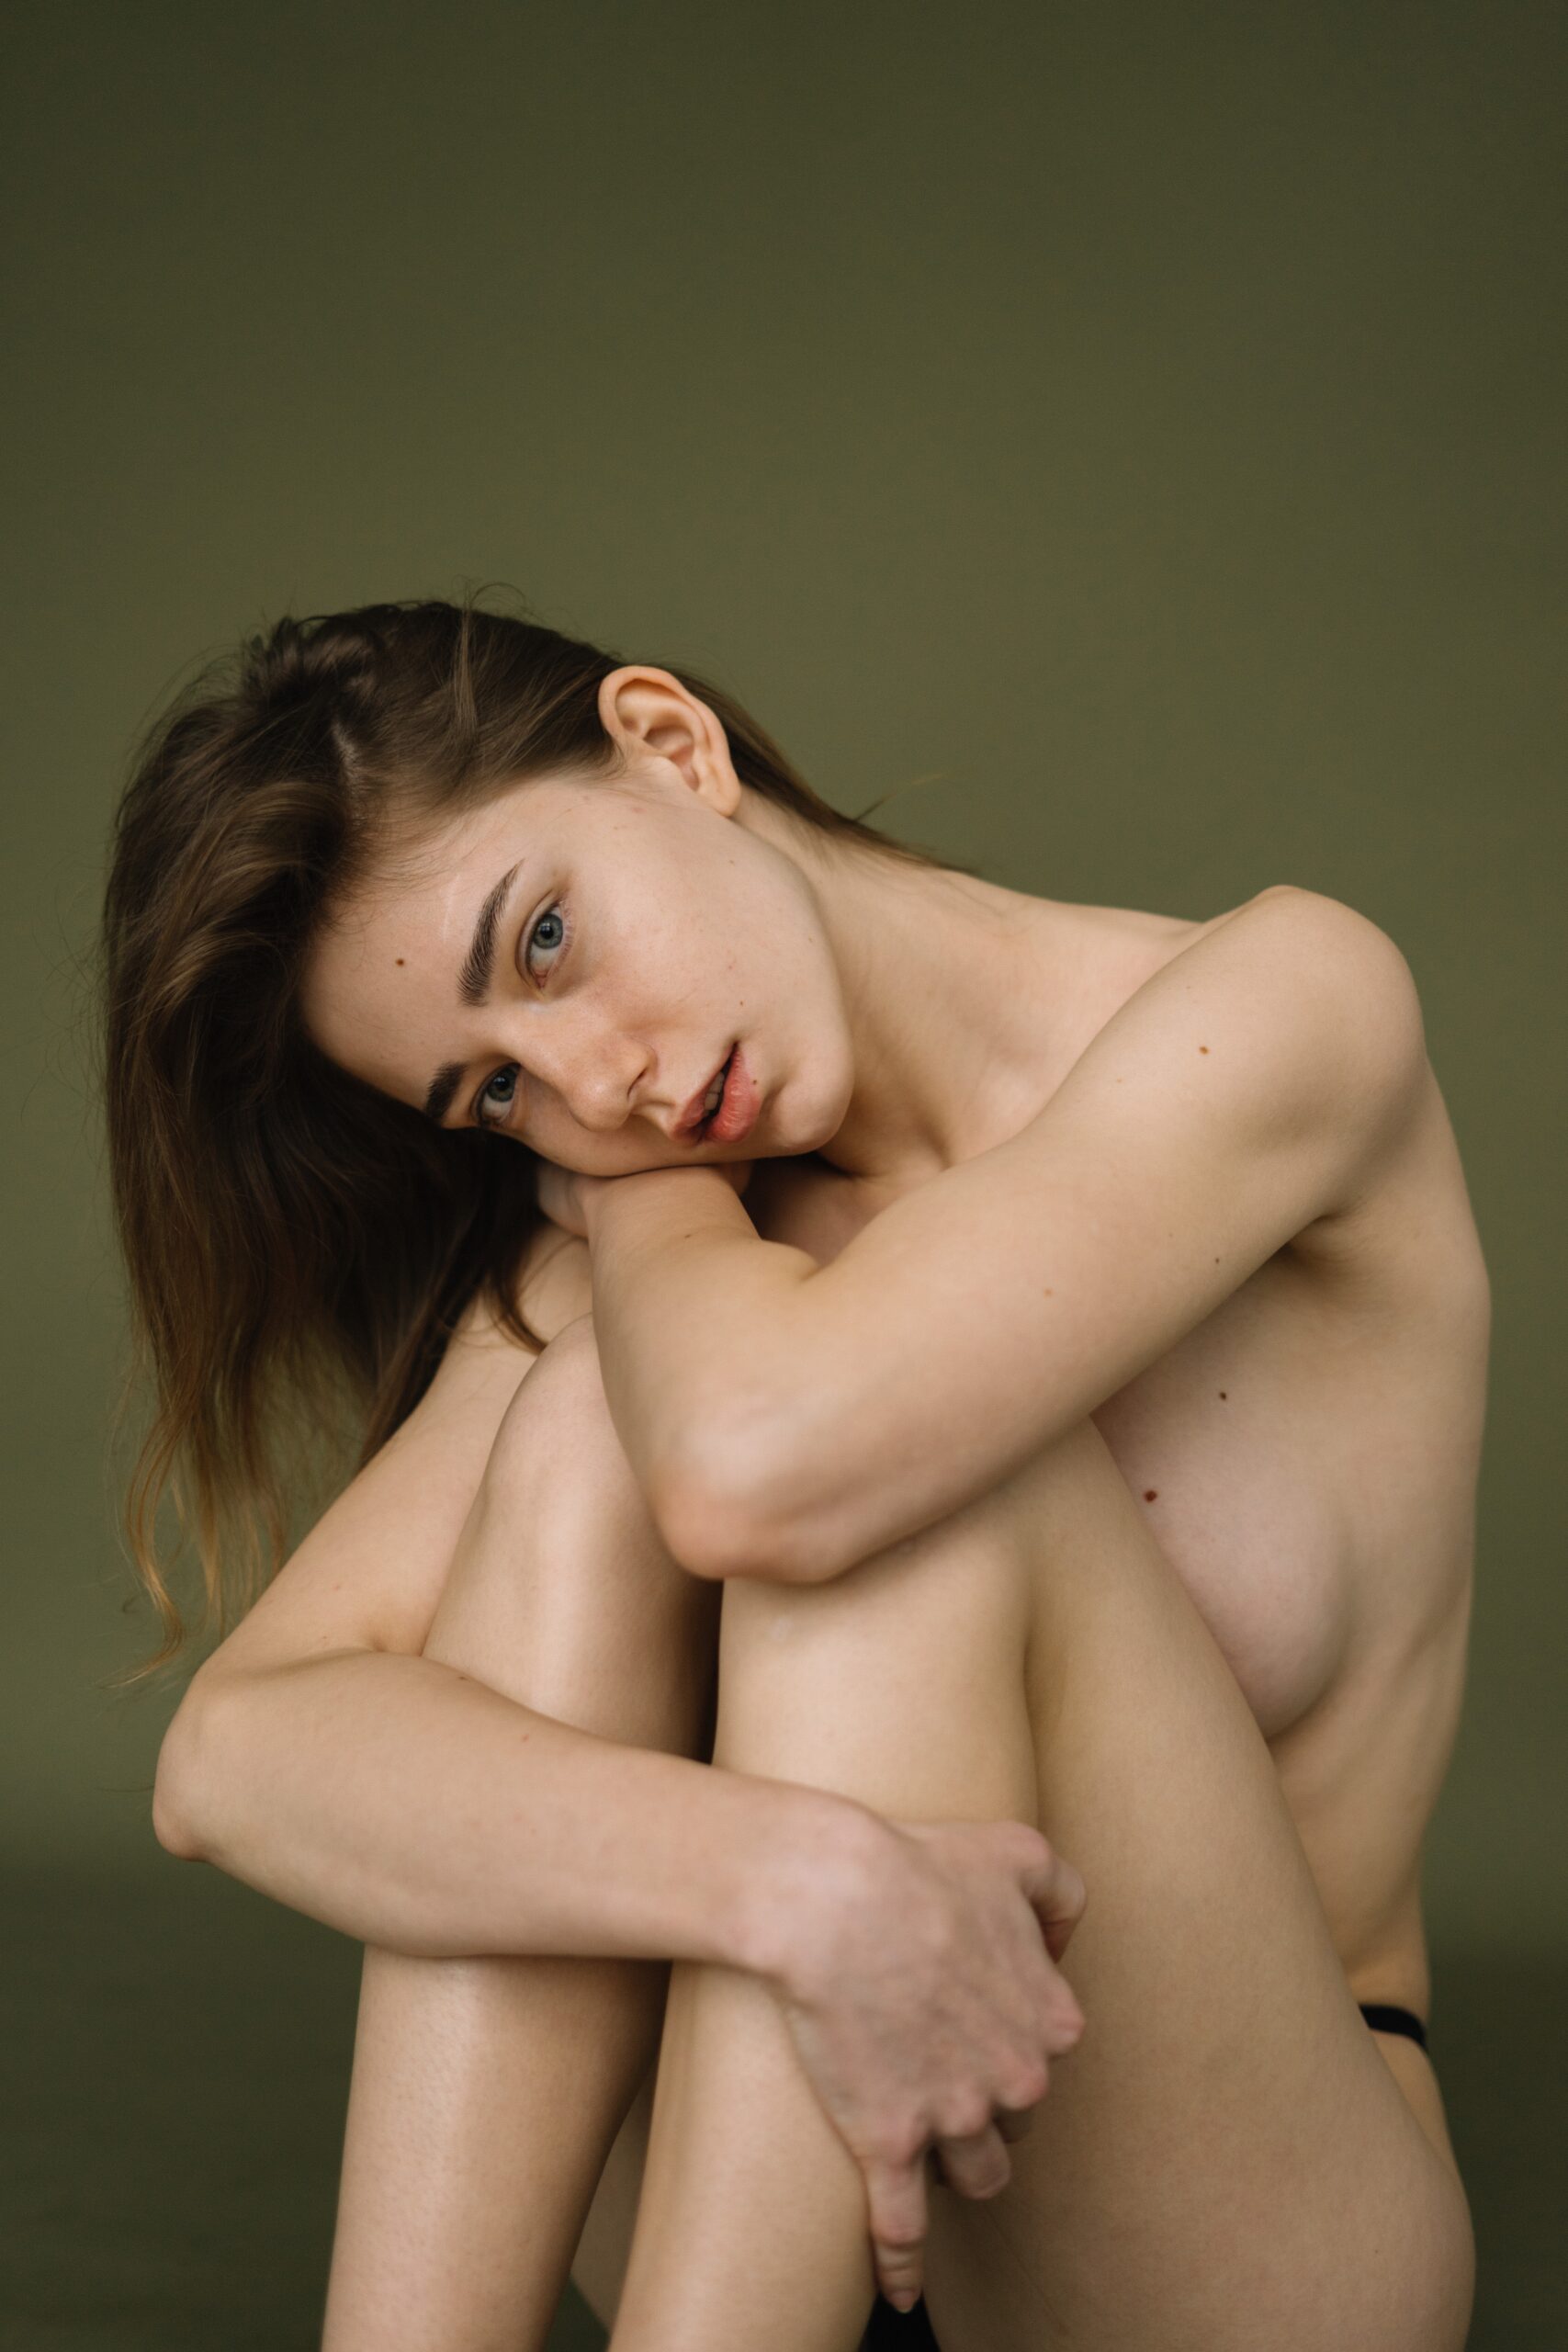 Photo by Ekaterina Belousova: https://www.pexels.com/photo/a-topless-woman-sitting-on-the-floor-8047169/